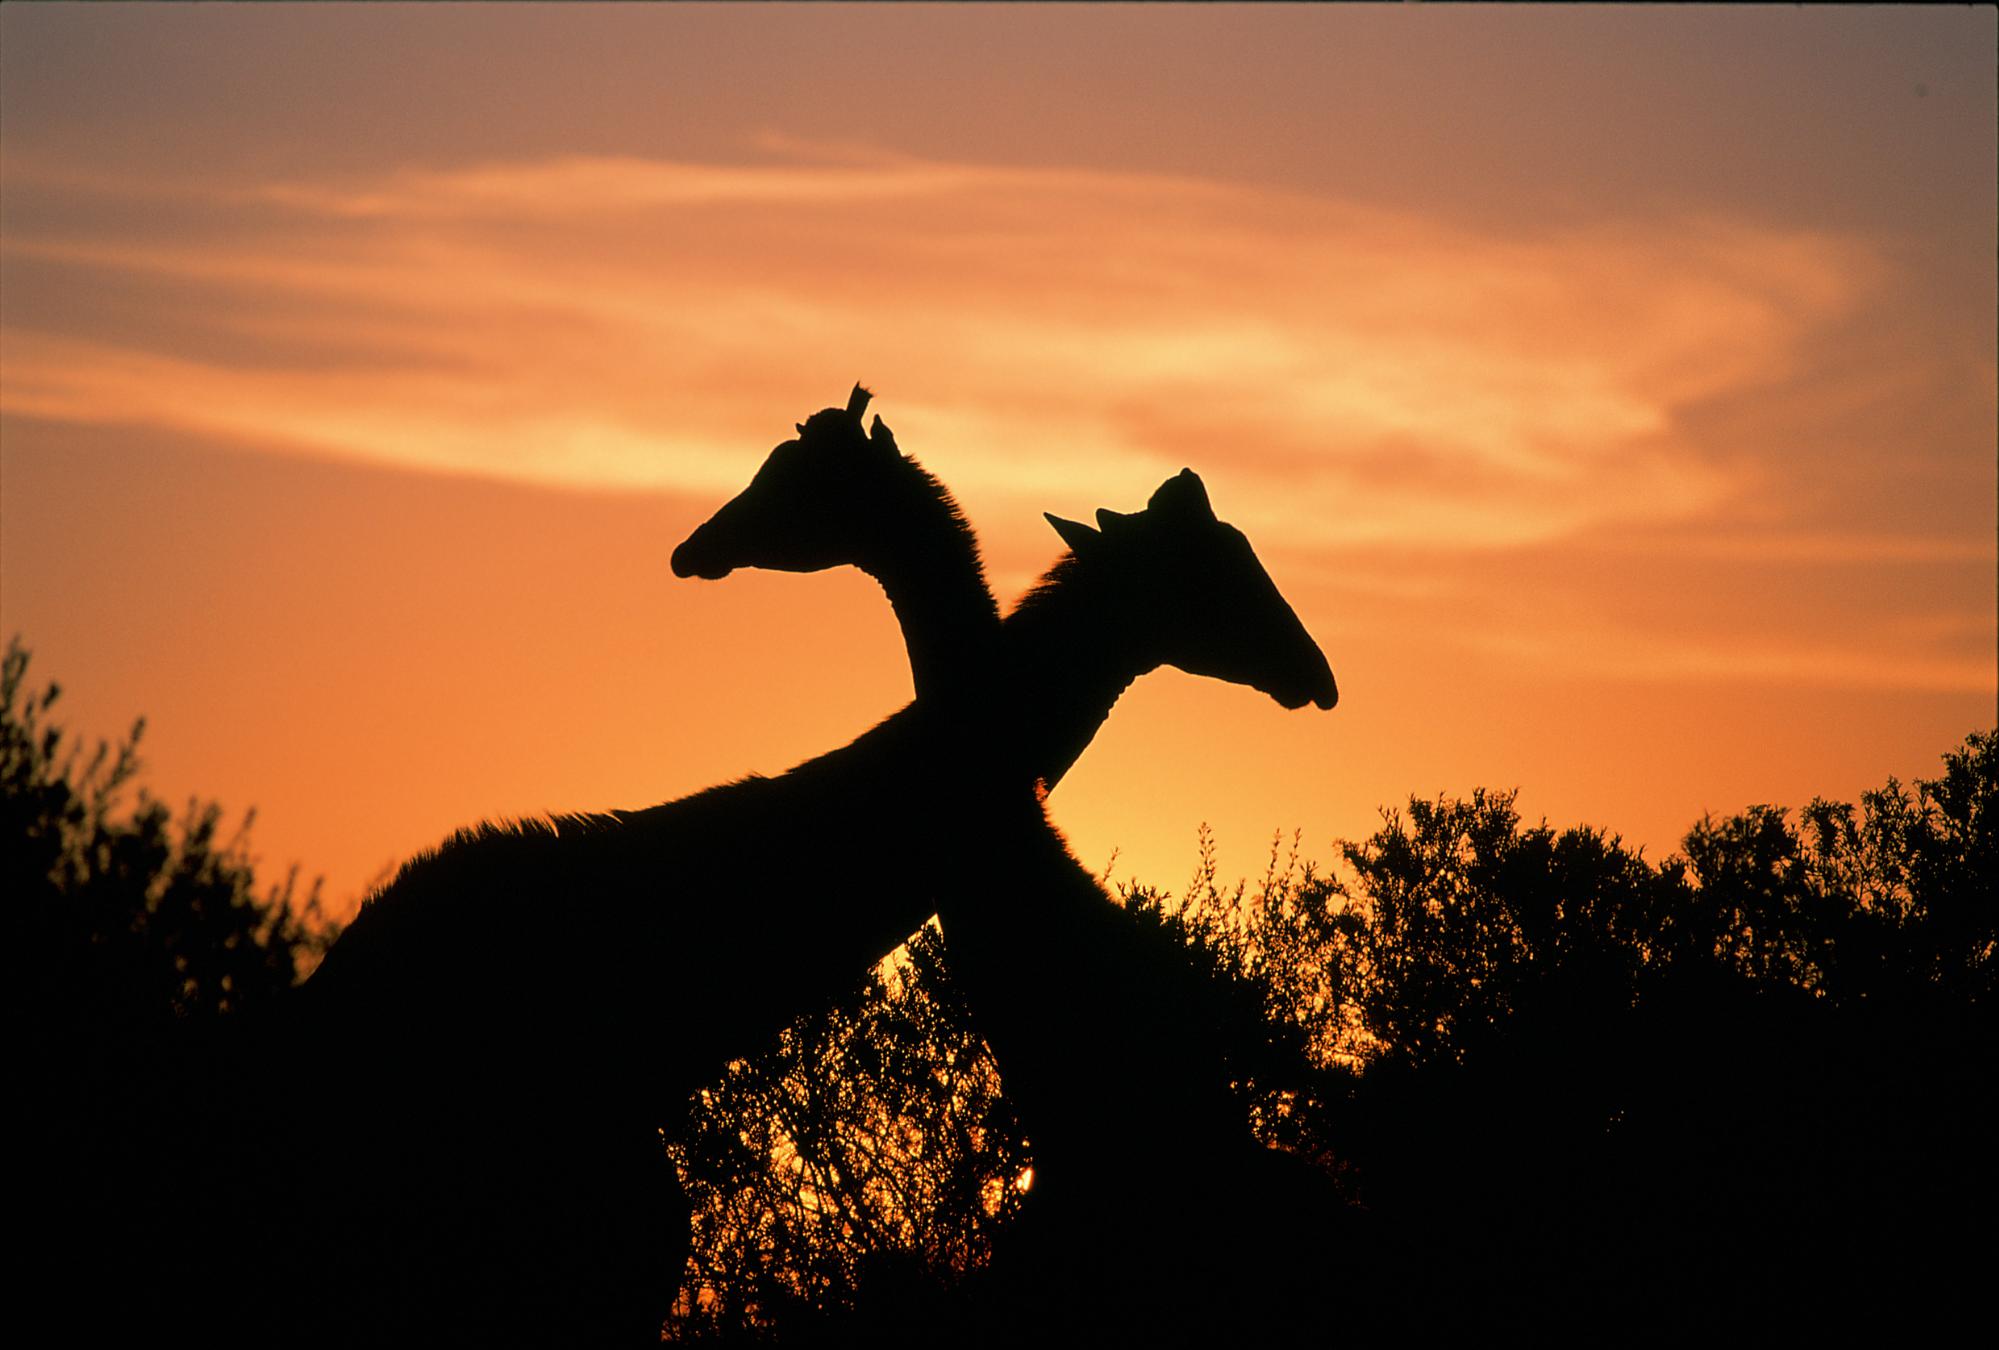 Giraffes at sunset on Naval Hill